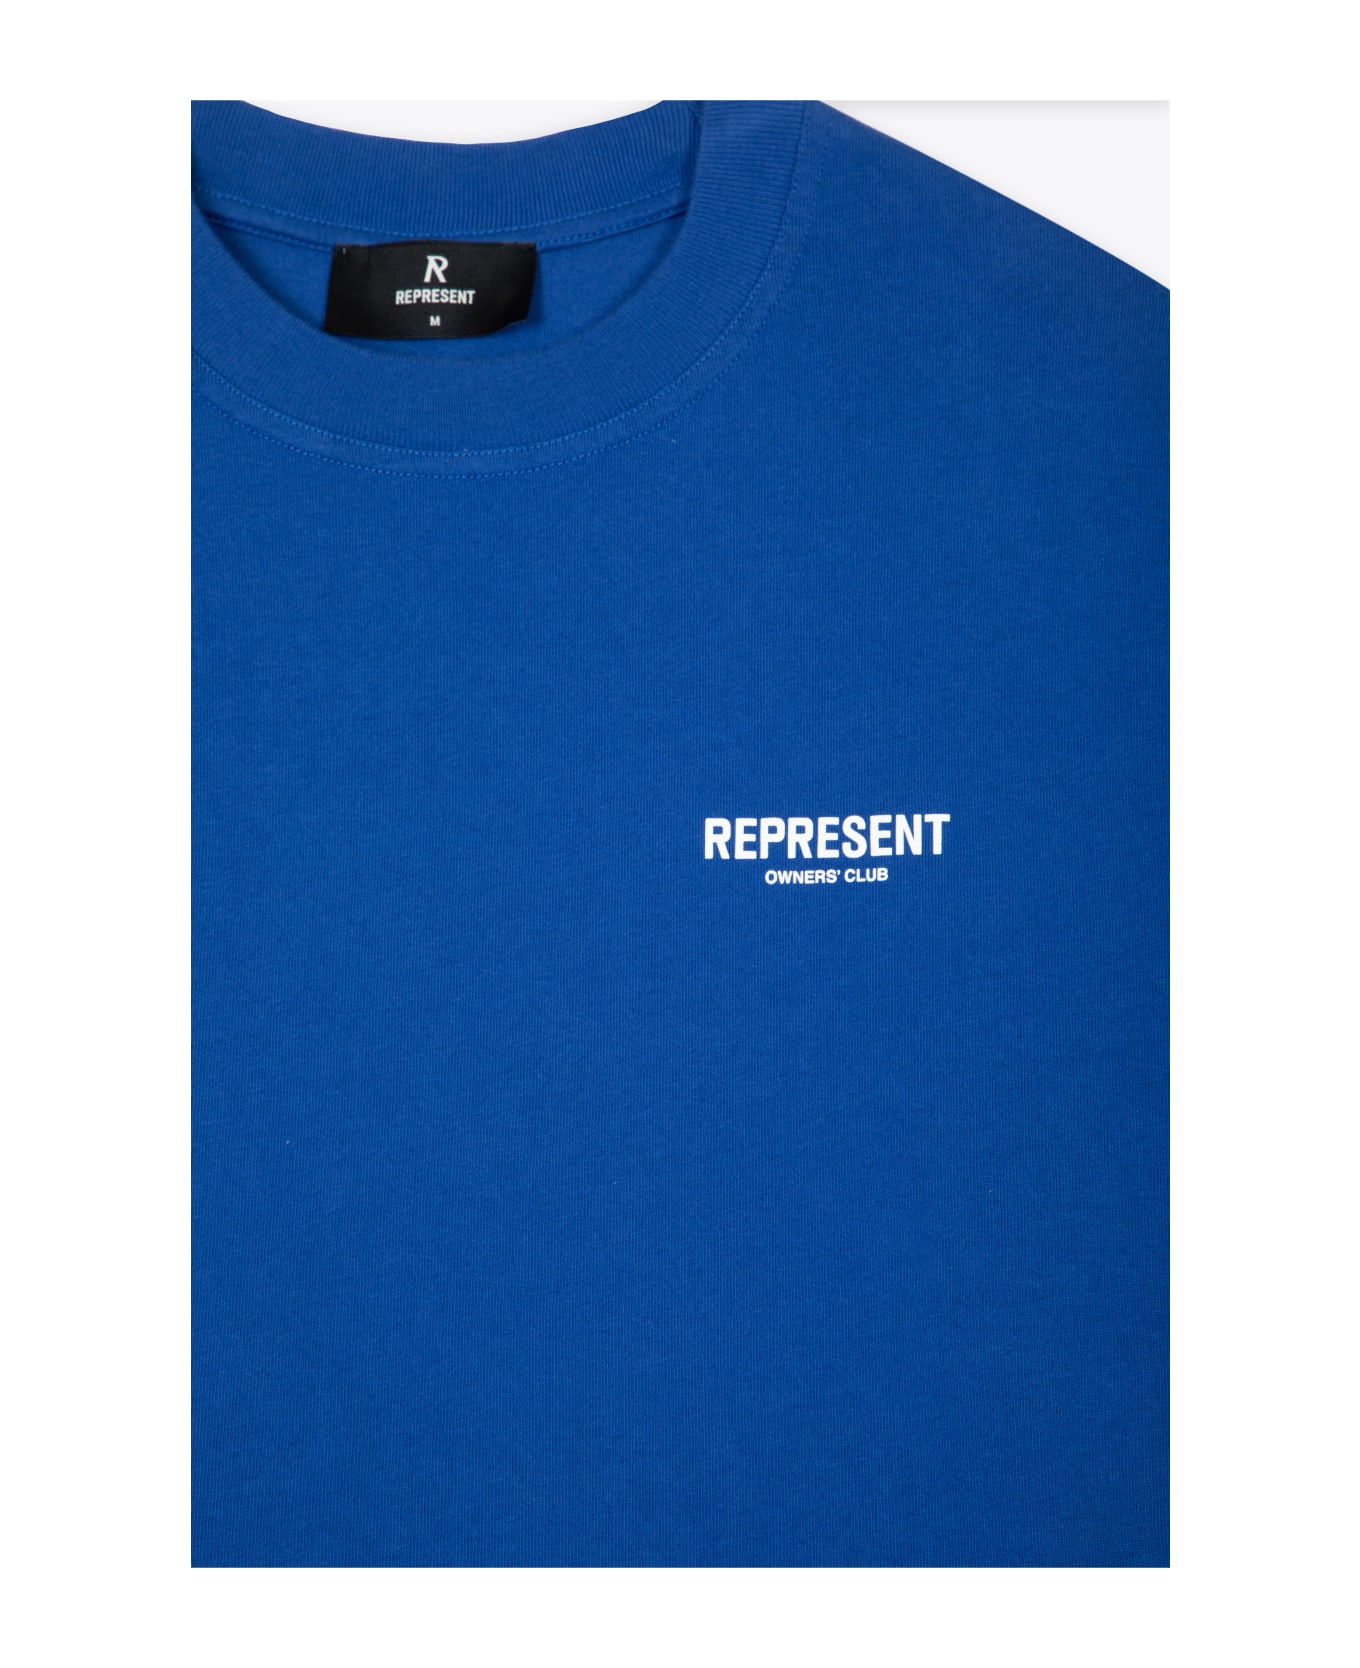 REPRESENT Owners Club T-shirt Cobalt blue pink t-shirt with logo - Owners Club T-shirt - Cobalto